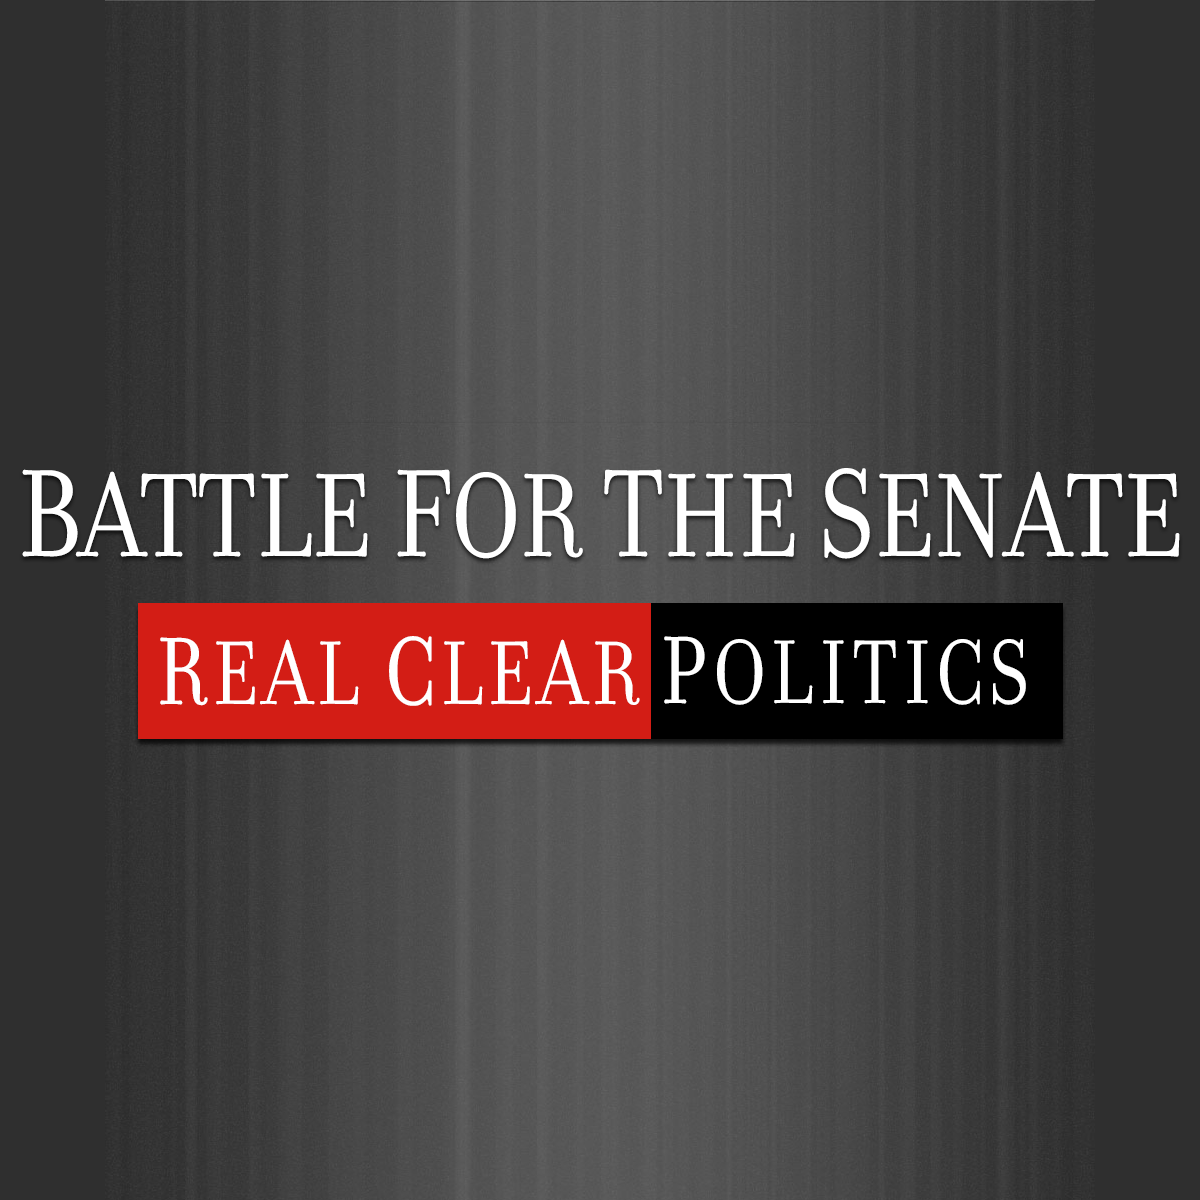 Real clear politics polls senate